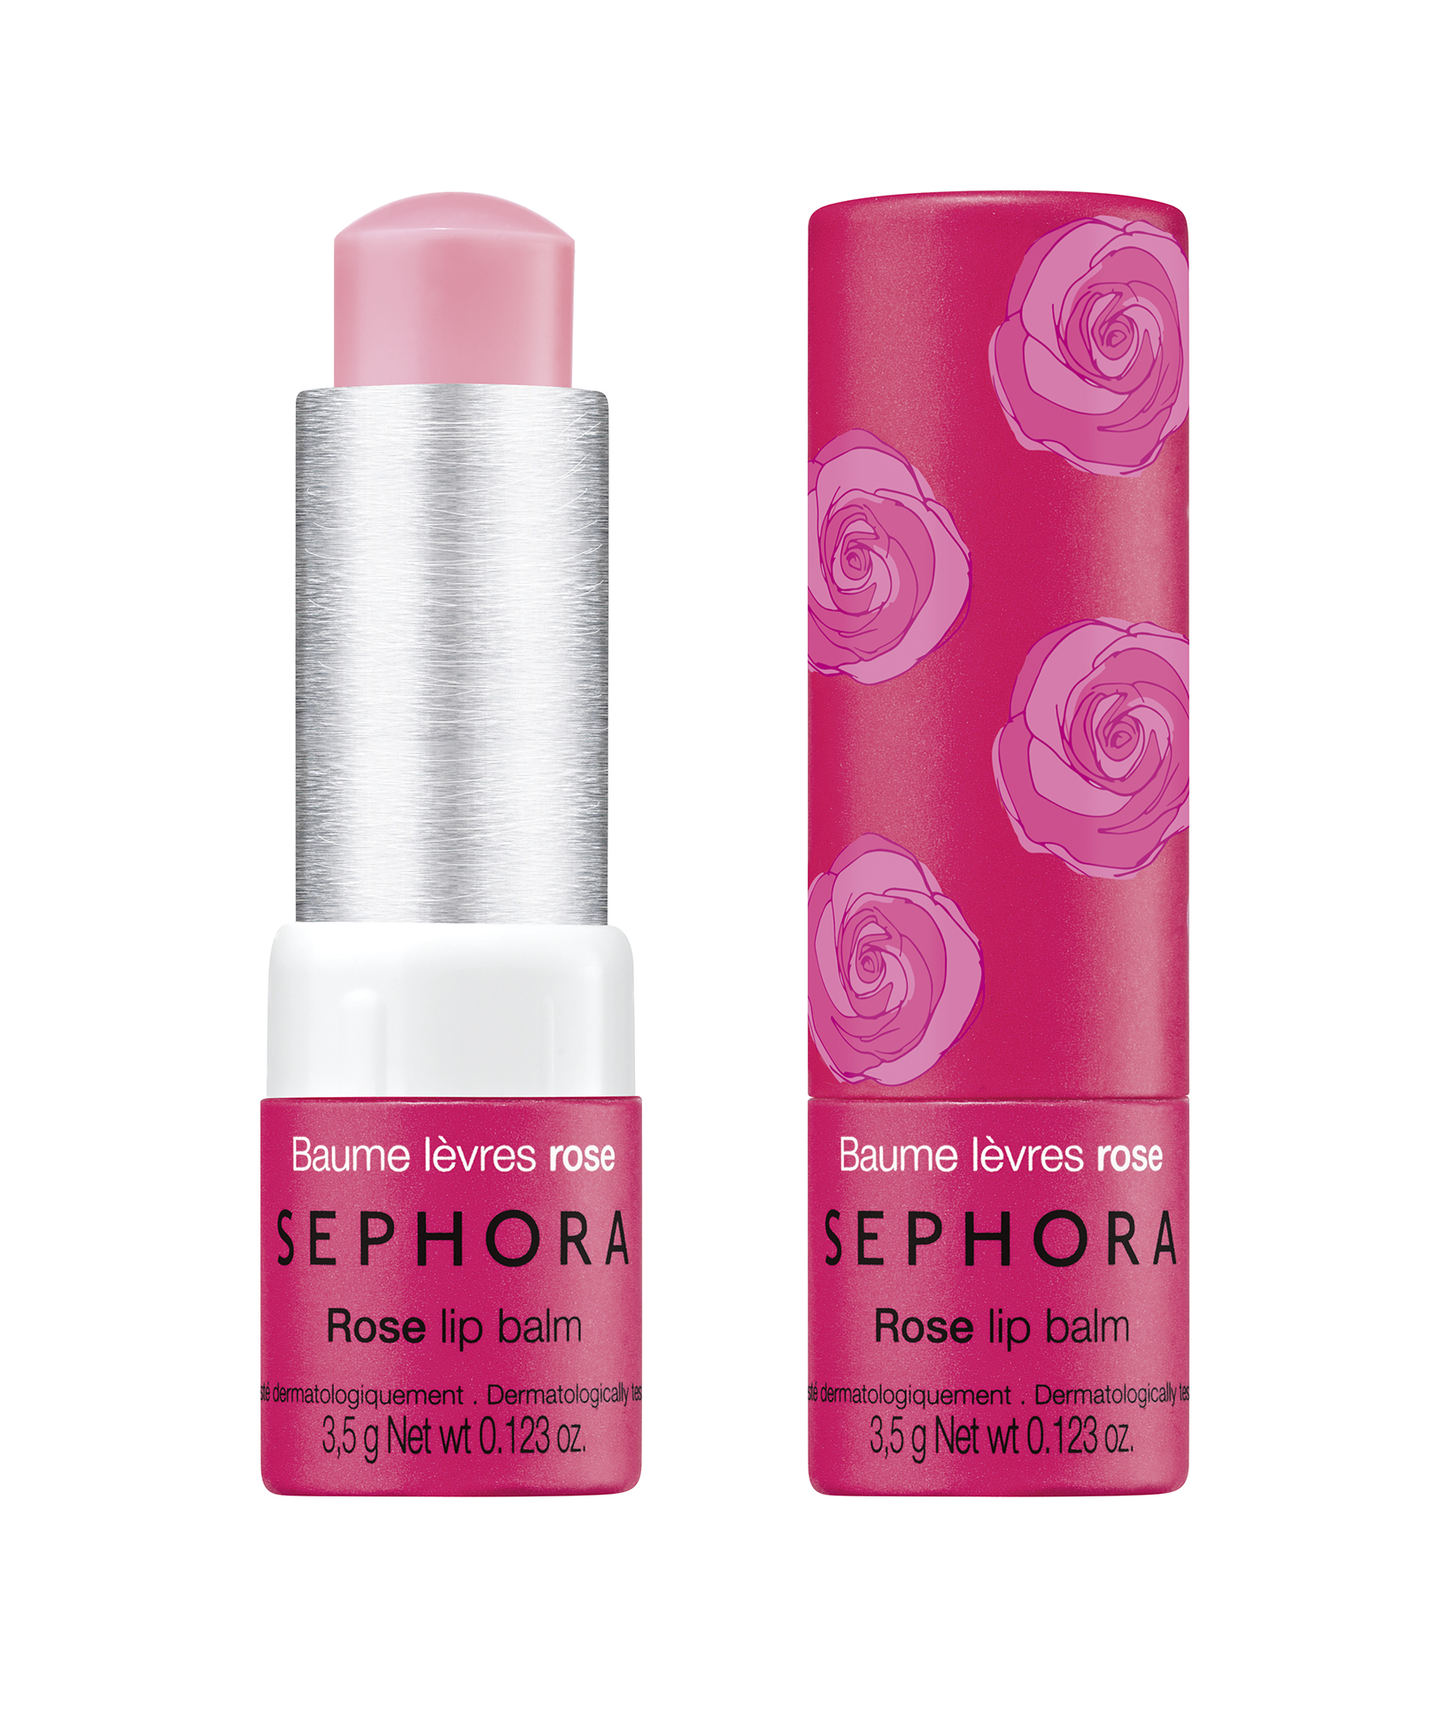 Rose lip balm | Made in Sephora